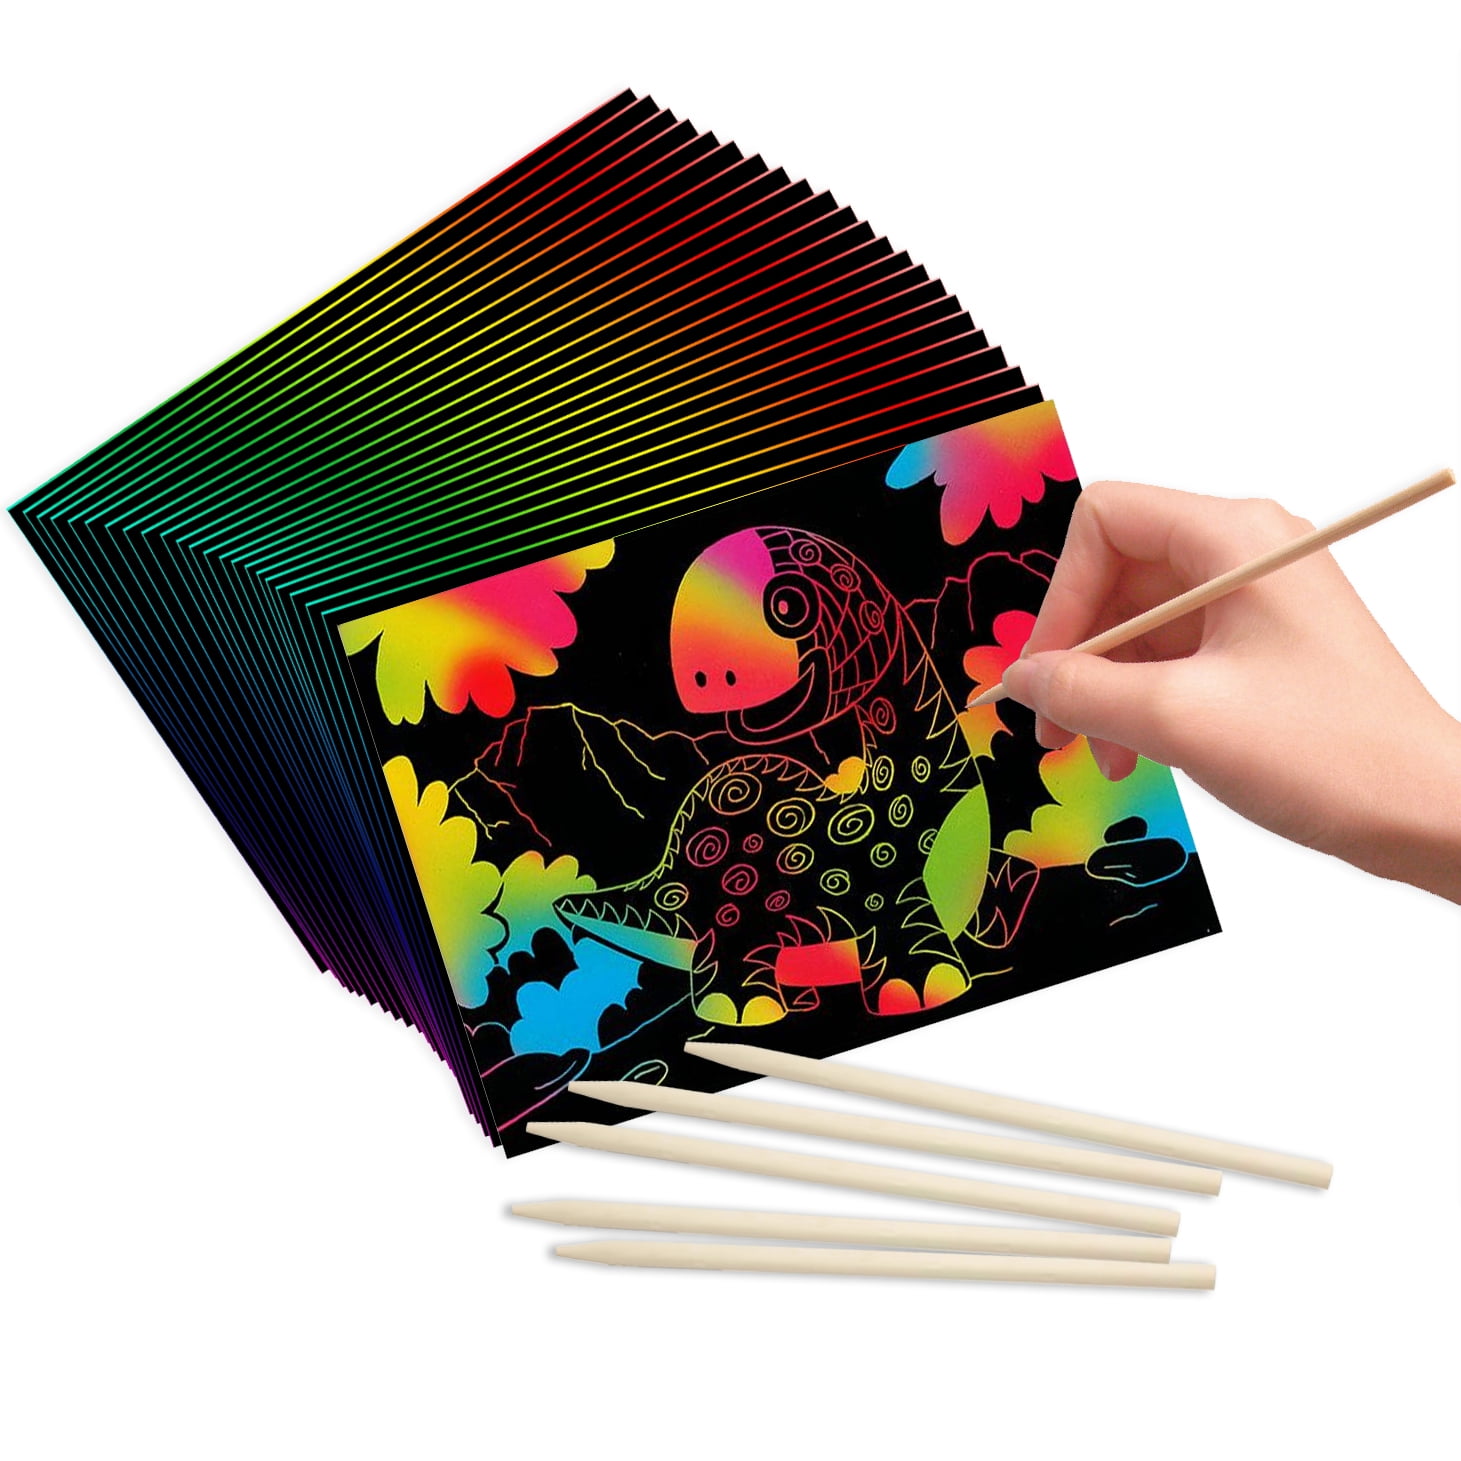 RMJOY Scratch Rainbow Art Paper Set - 50pcs Magic Scratch Off Art Craft Supplies Kits for Kids Girls Boys Black Scratch Notes Sheet Doodle Pad for Fun